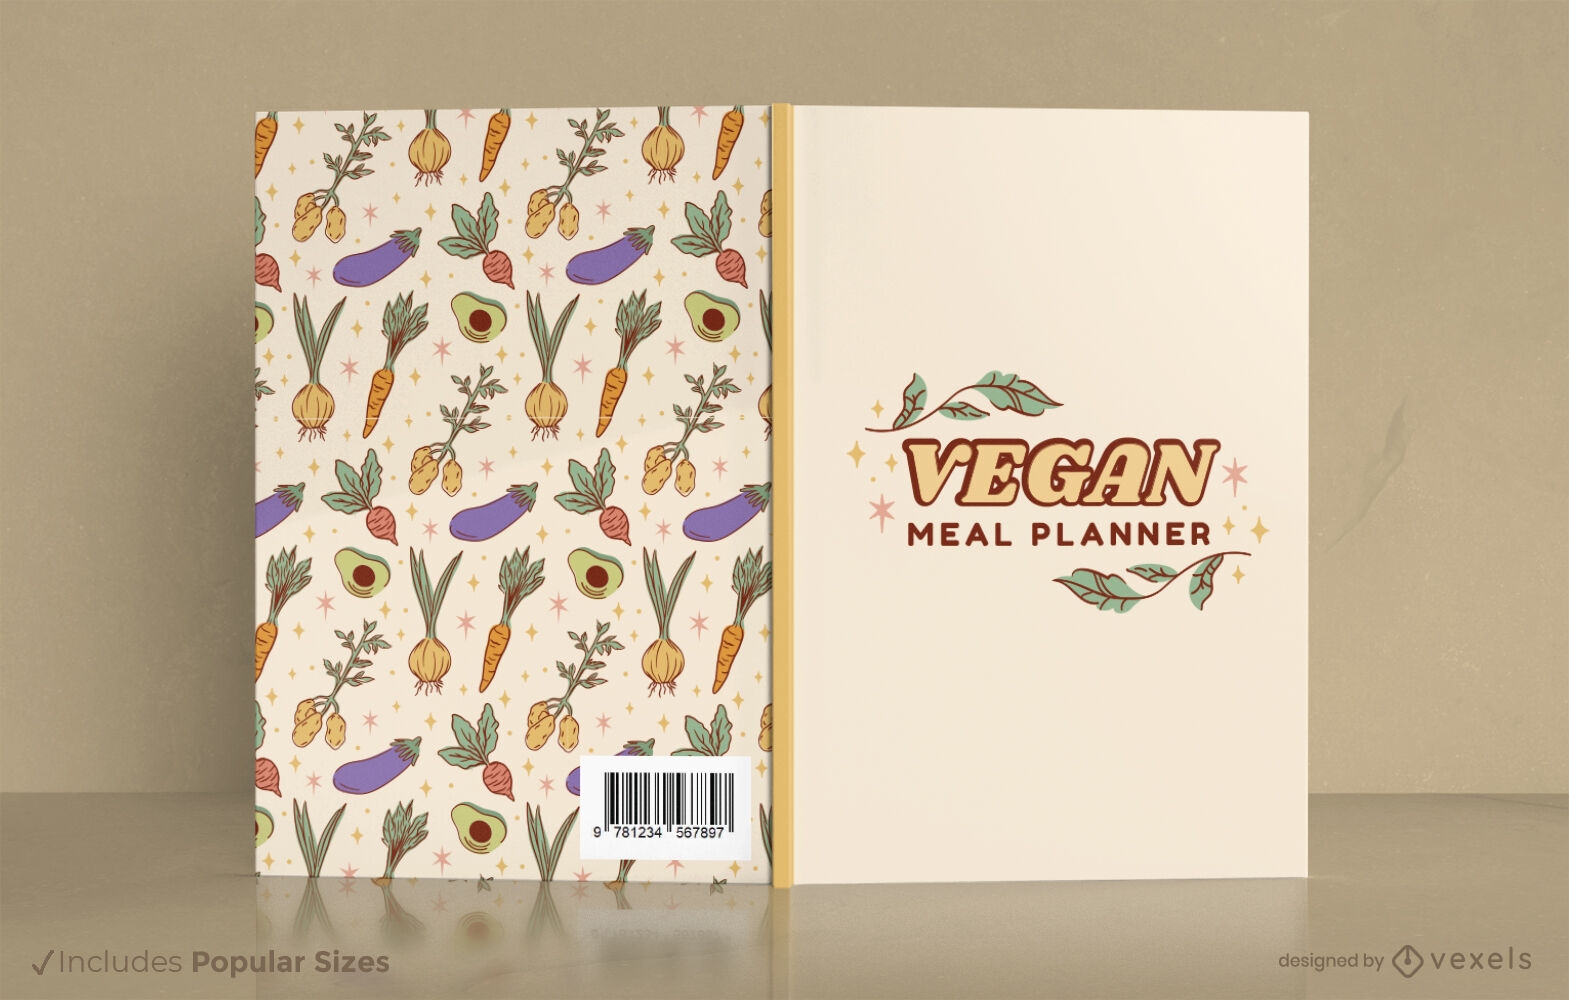 Vegan meal planner book cover design